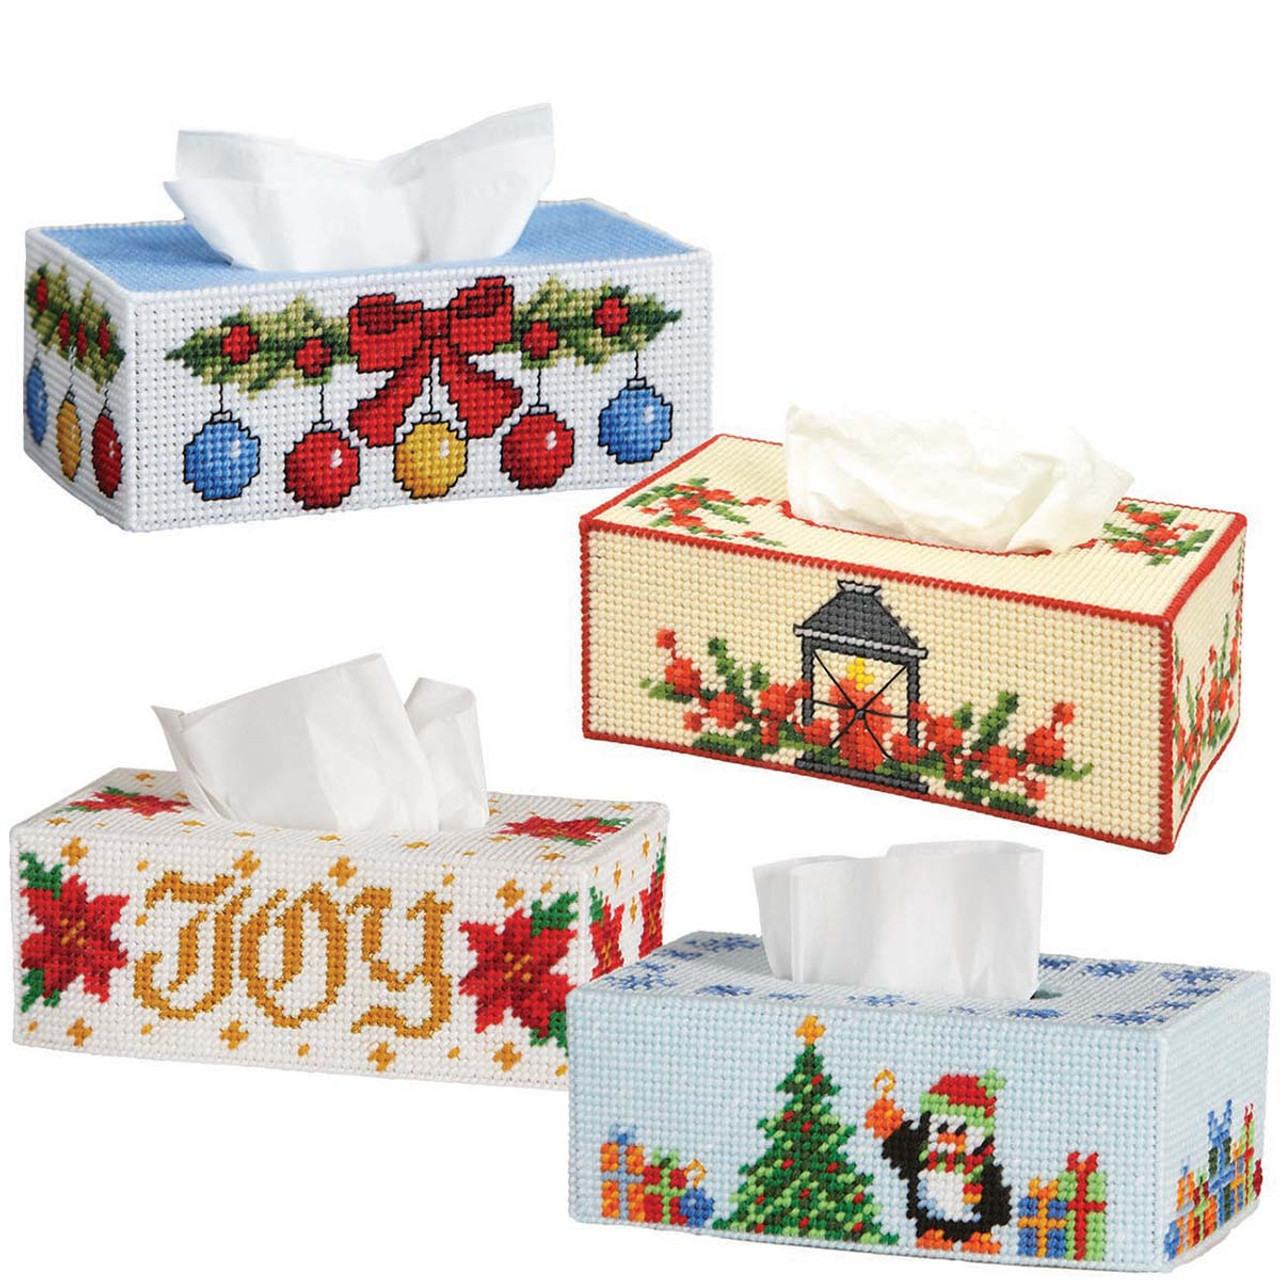 Herrschners Christmas Tissue Box Set Plastic Canvas